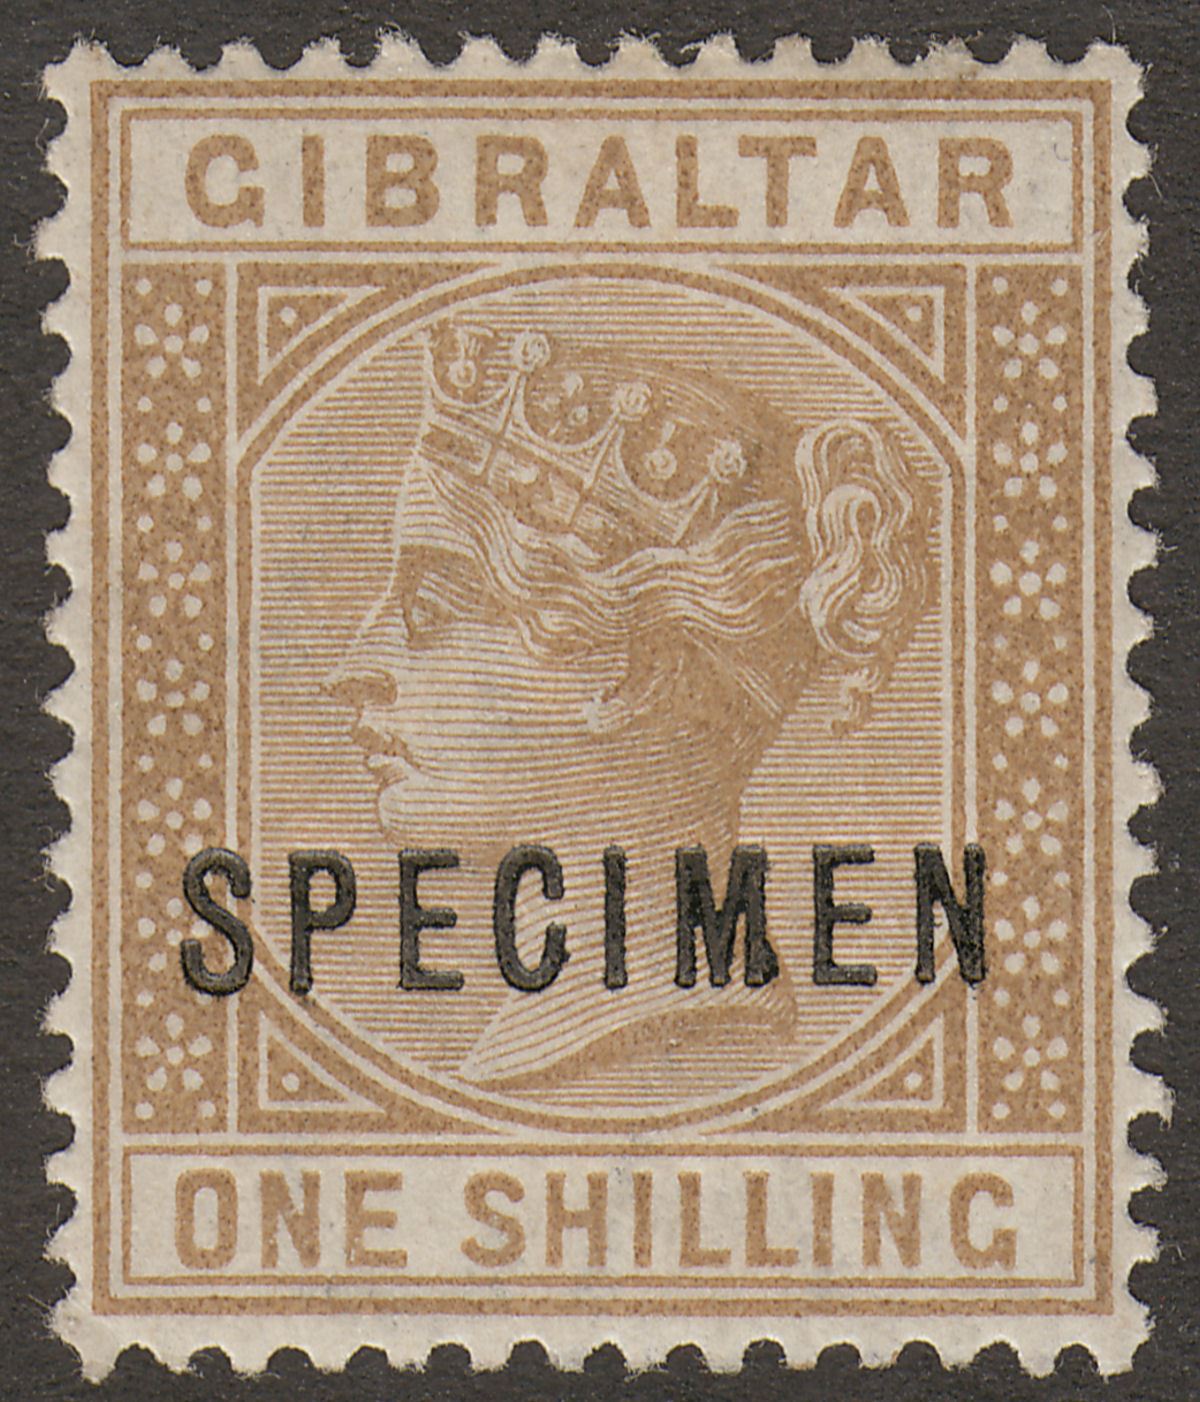 Gibraltar 1887 QV 1sh Bistre SPECIMEN overprint SG14s cat £250 as mint